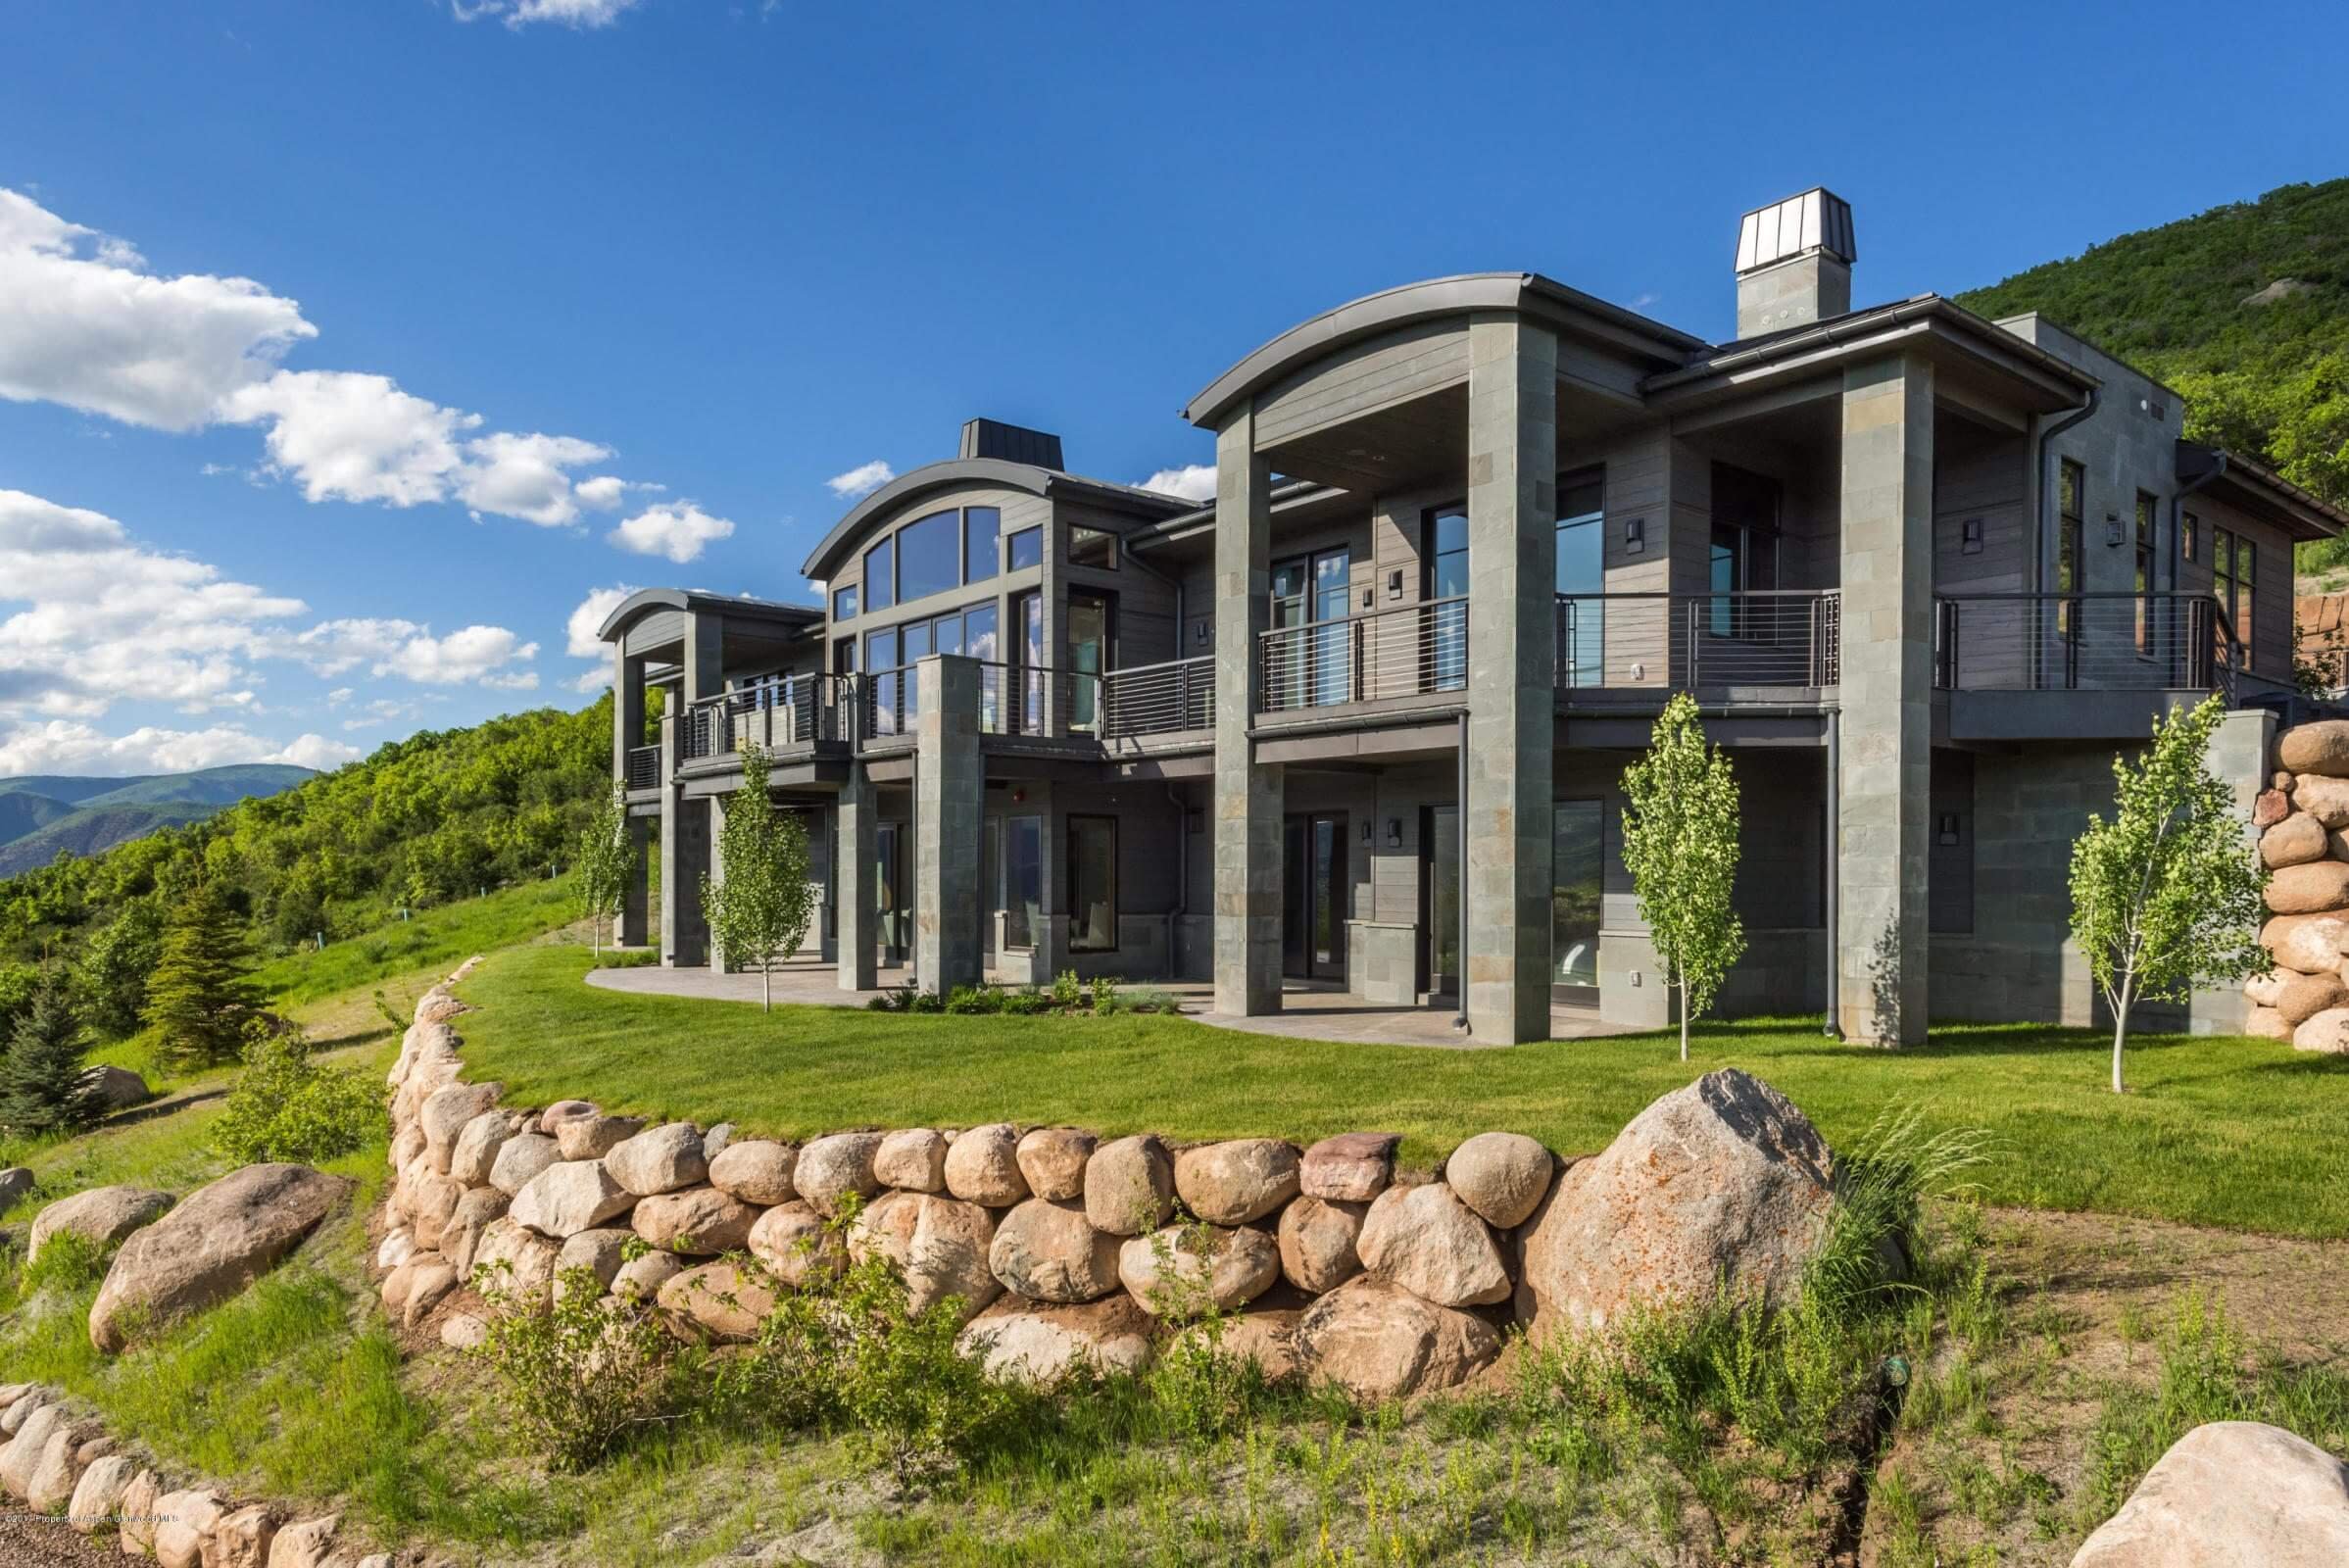 2015 Built McLain Flats Home Sells at $9M/$1,189 sq ft Furnished Image